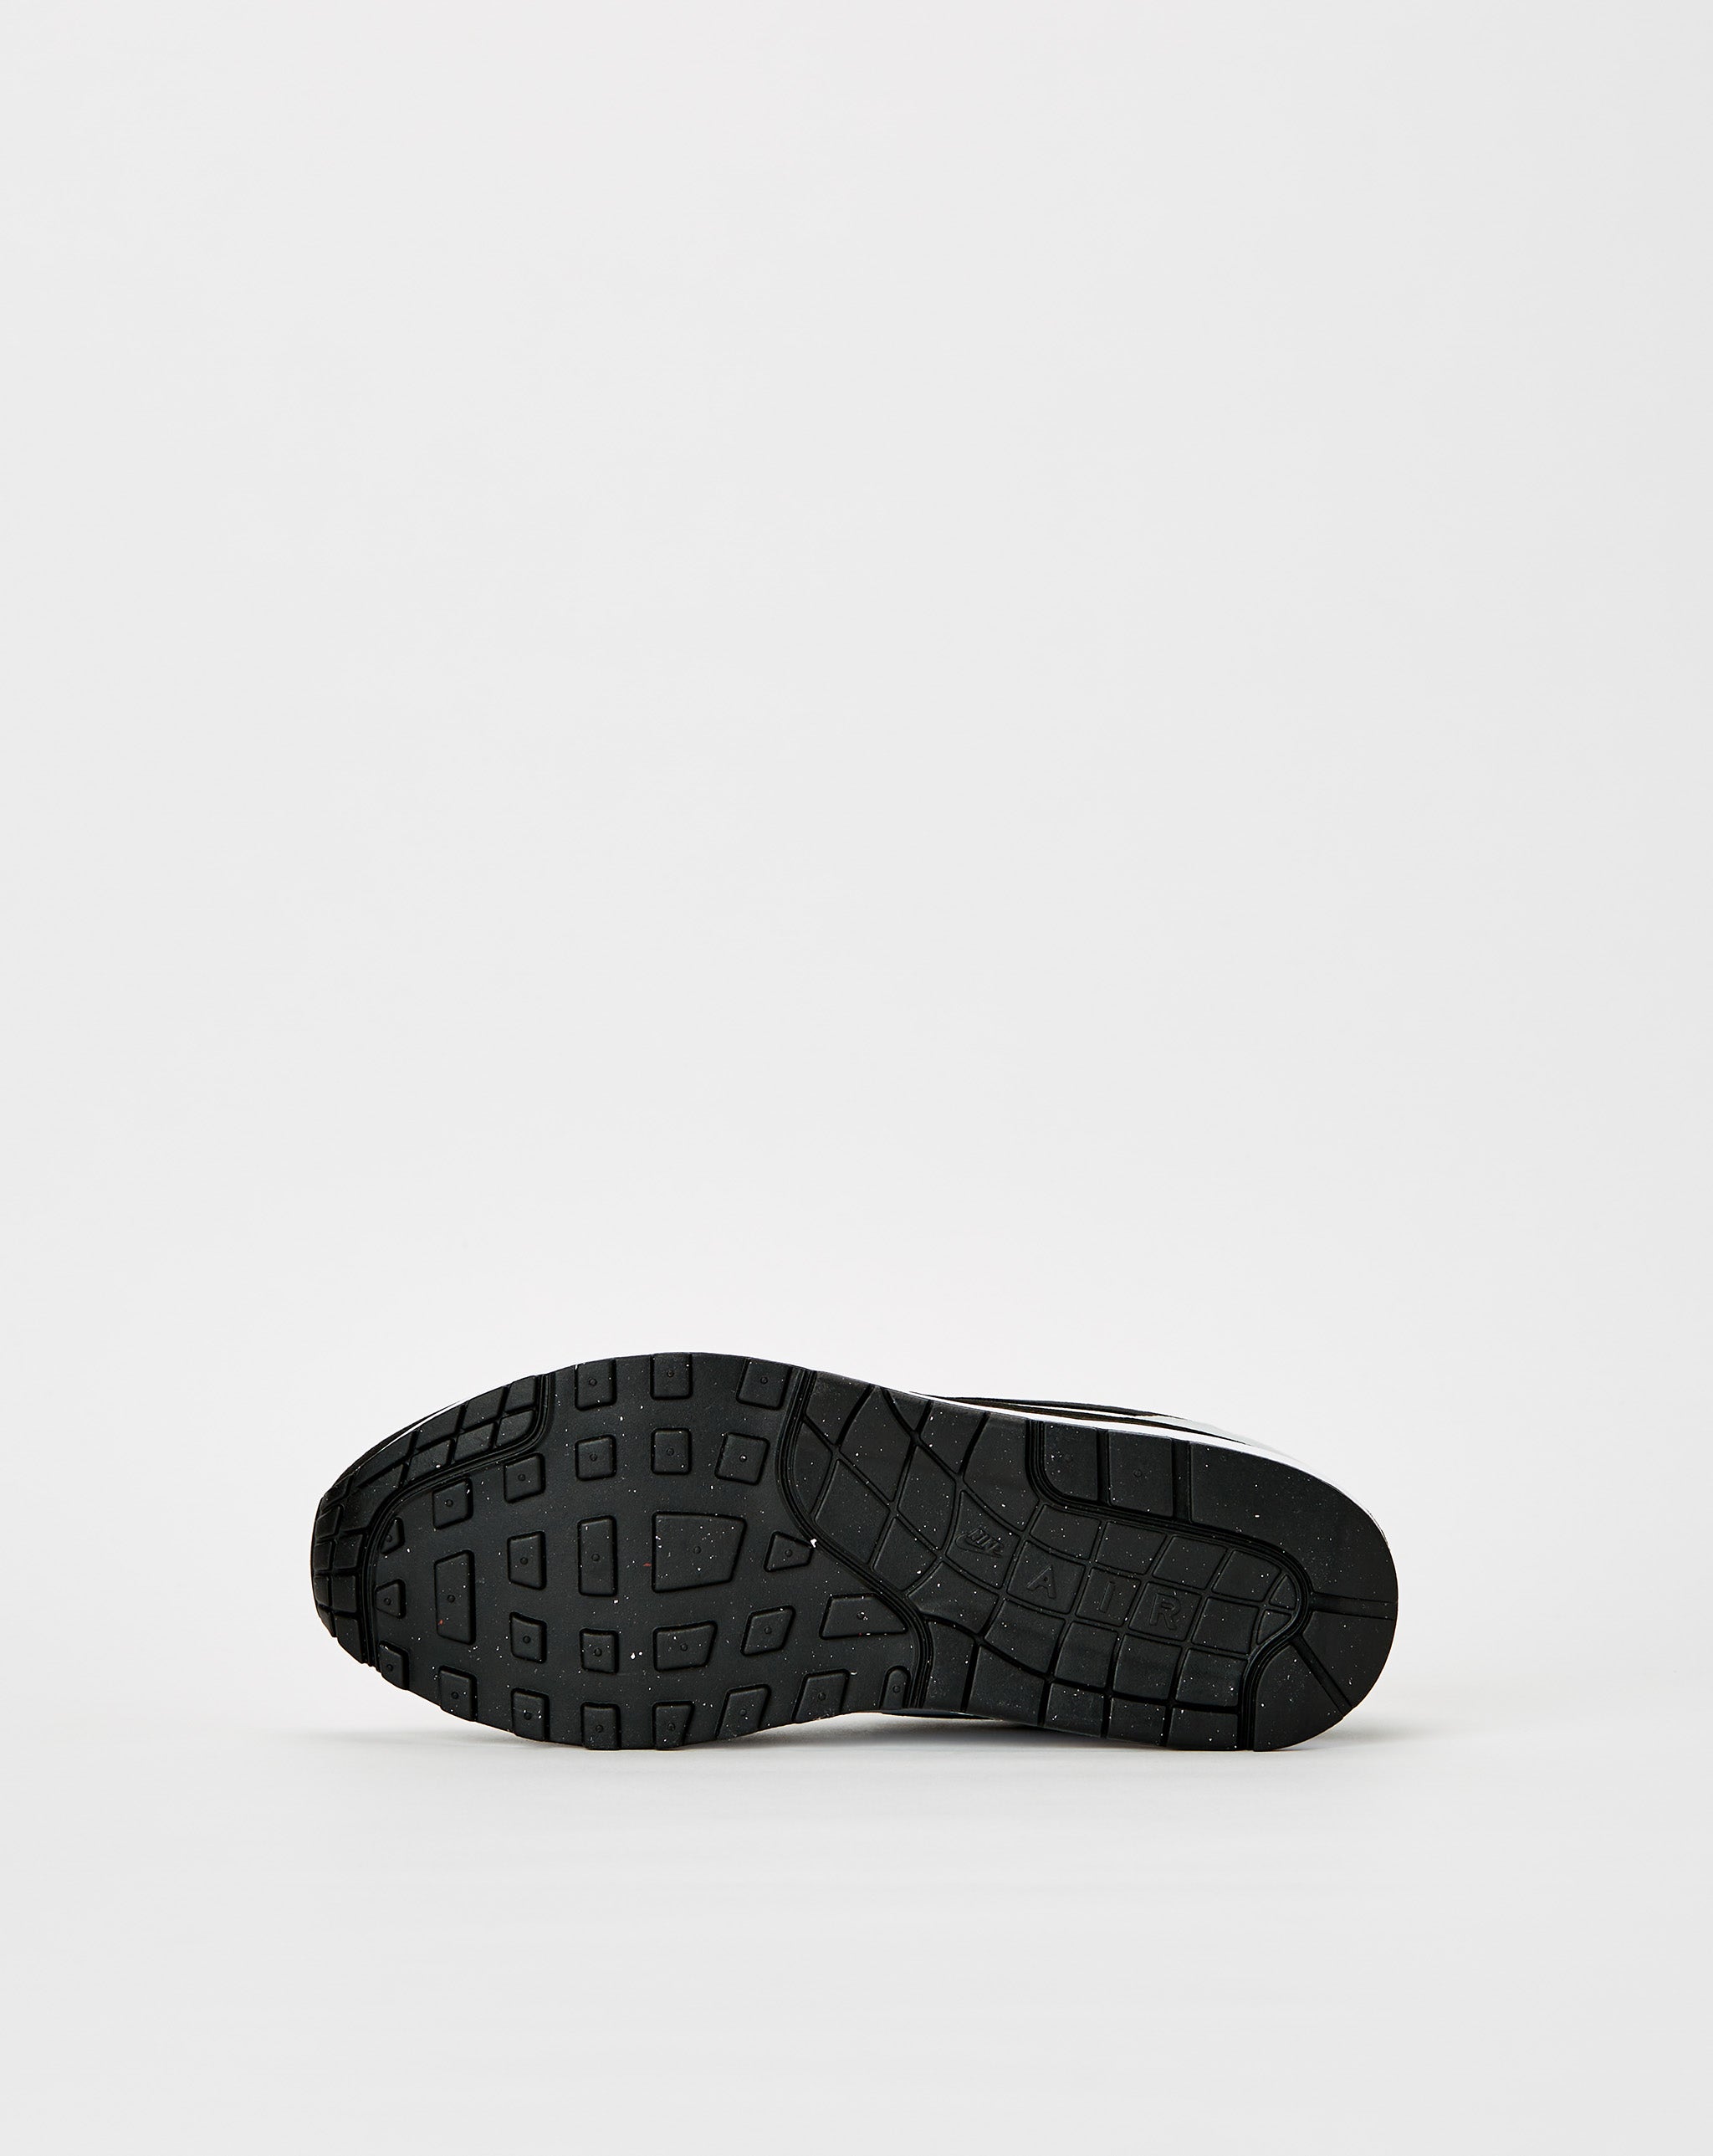 Nike nike roshe fit tight shoes black friday women  - Cheap Erlebniswelt-fliegenfischen Jordan outlet